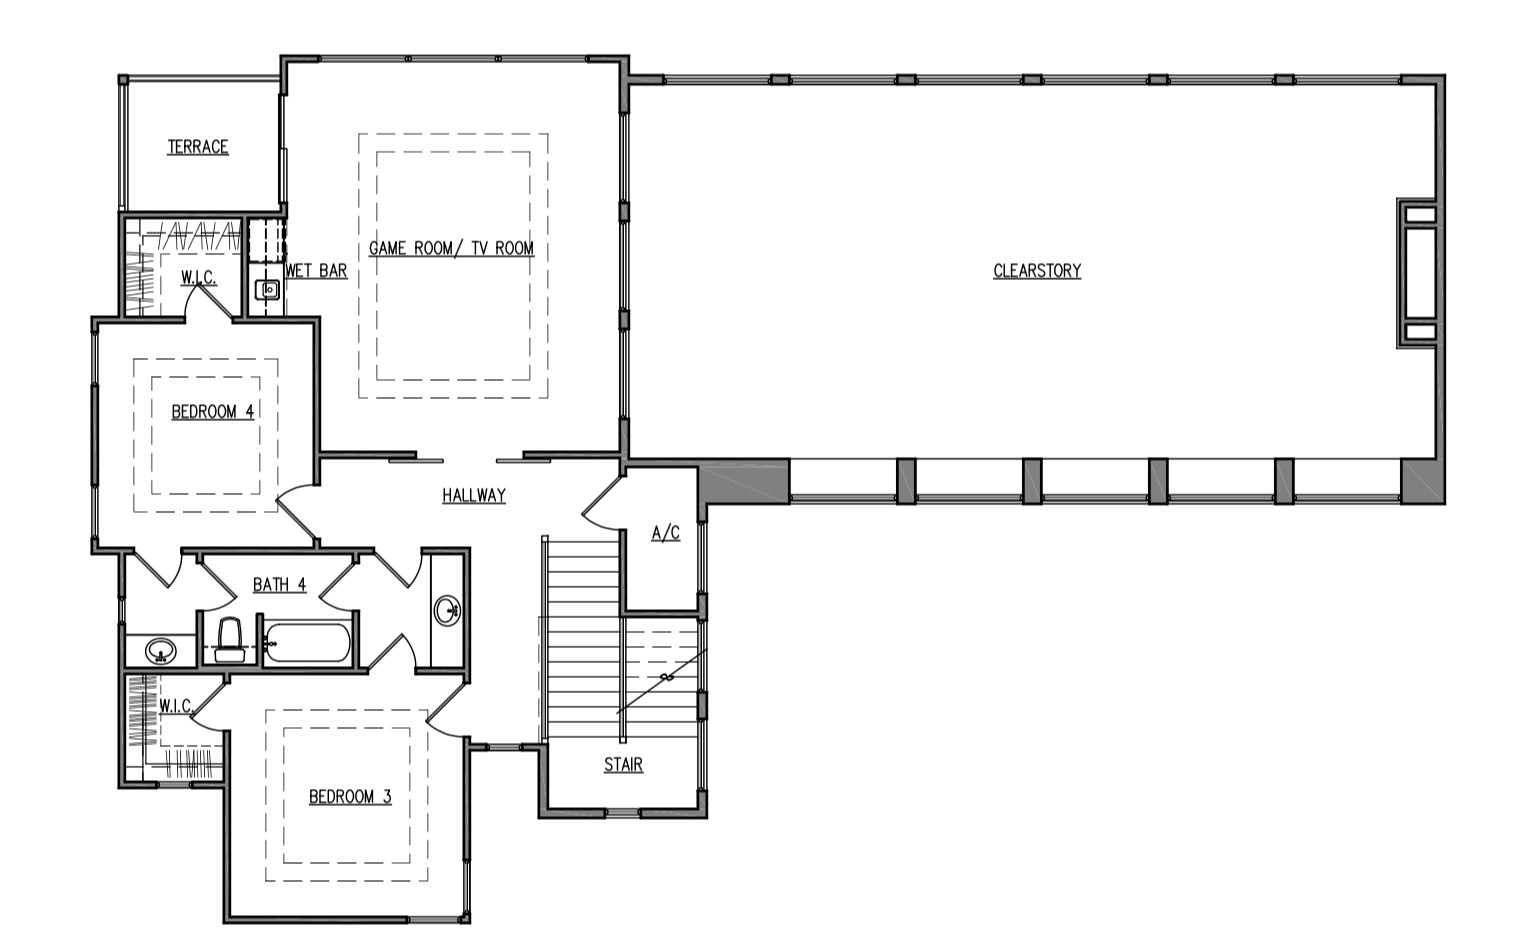 Lifestyle by stadler floor plan